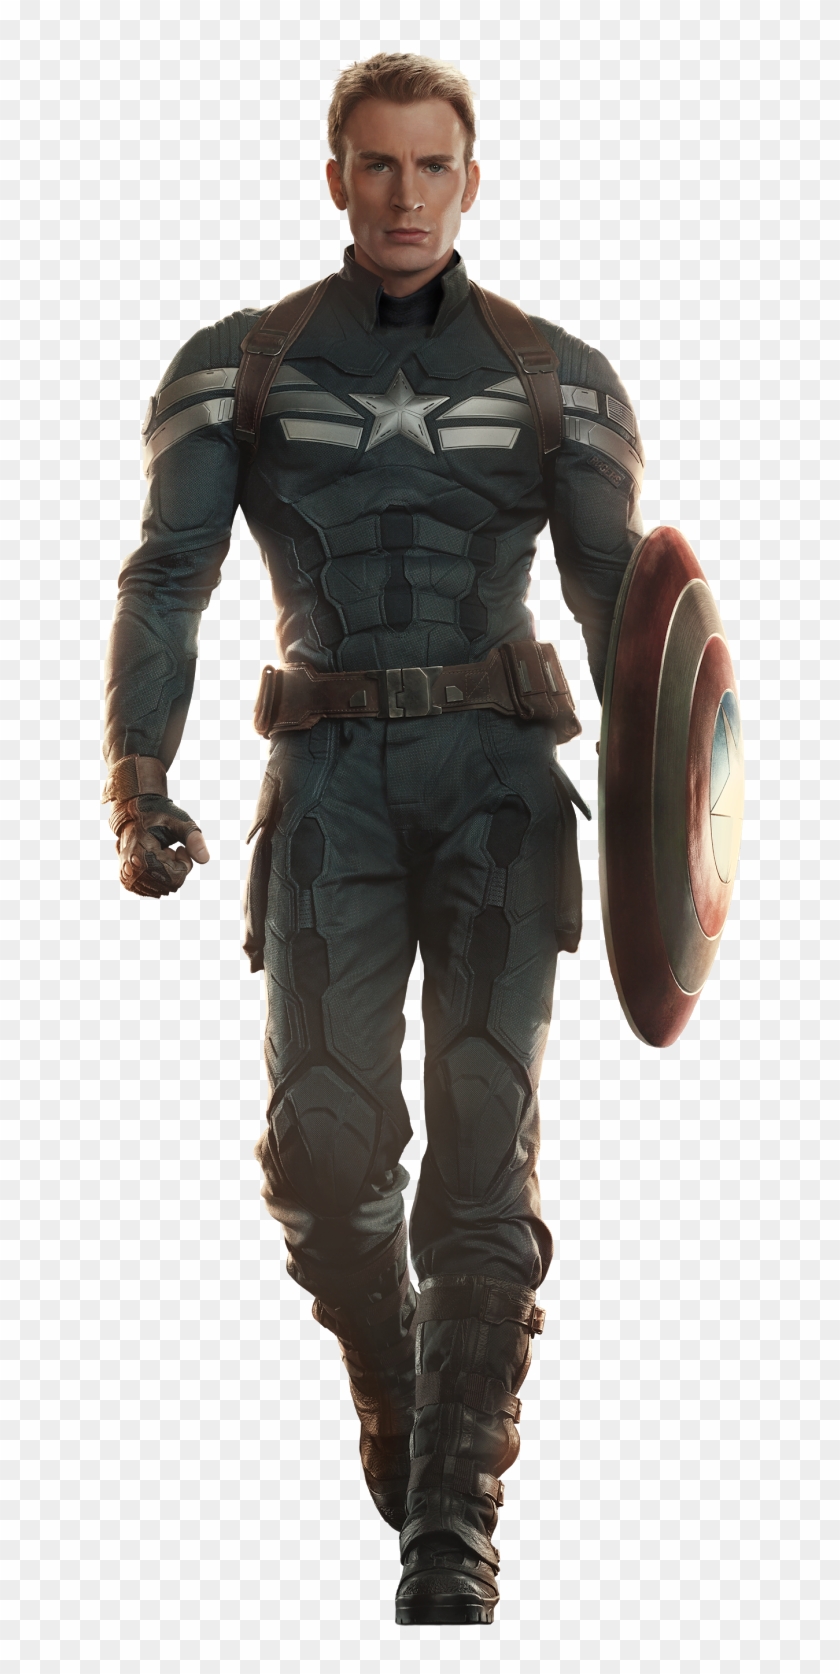 Captain America Png Image Transparent Background - Captain America Chris Evans Standing Clipart #565689